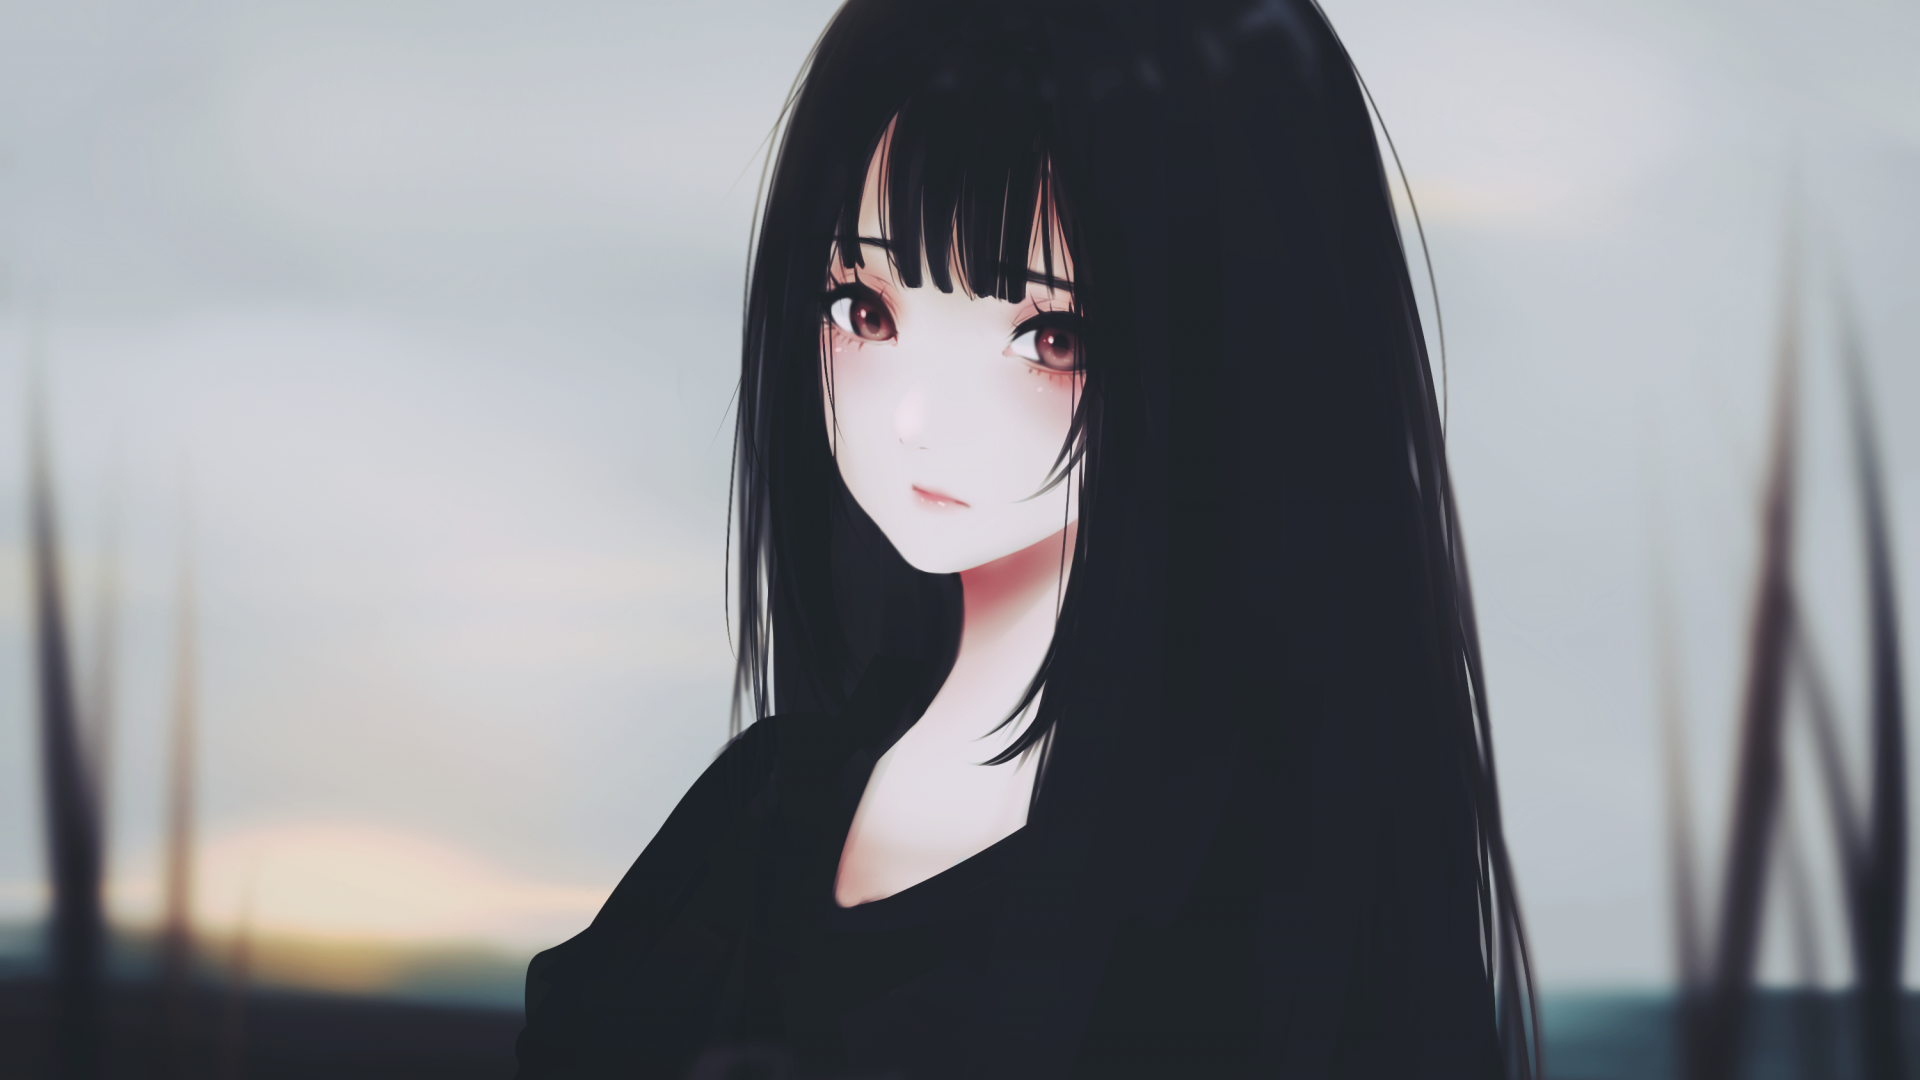 Download 1920x1080 Anime Girl, Black Hair, Sad Expression, Semi